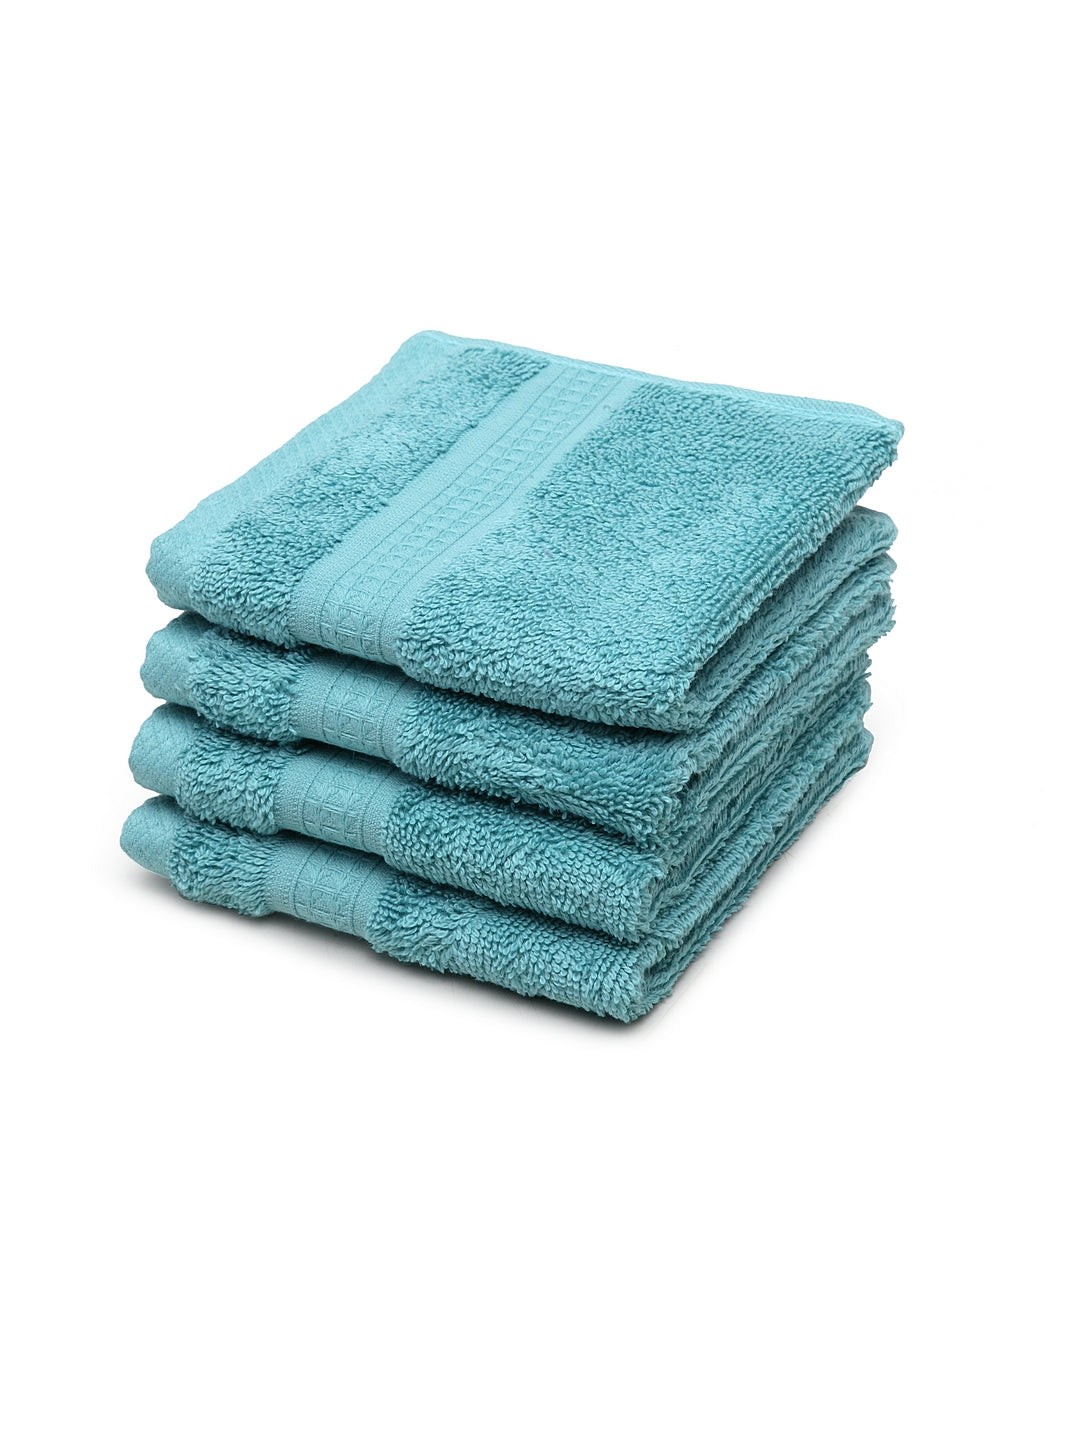 Spaces Organic 4 Pieces Face Towels (Blue)